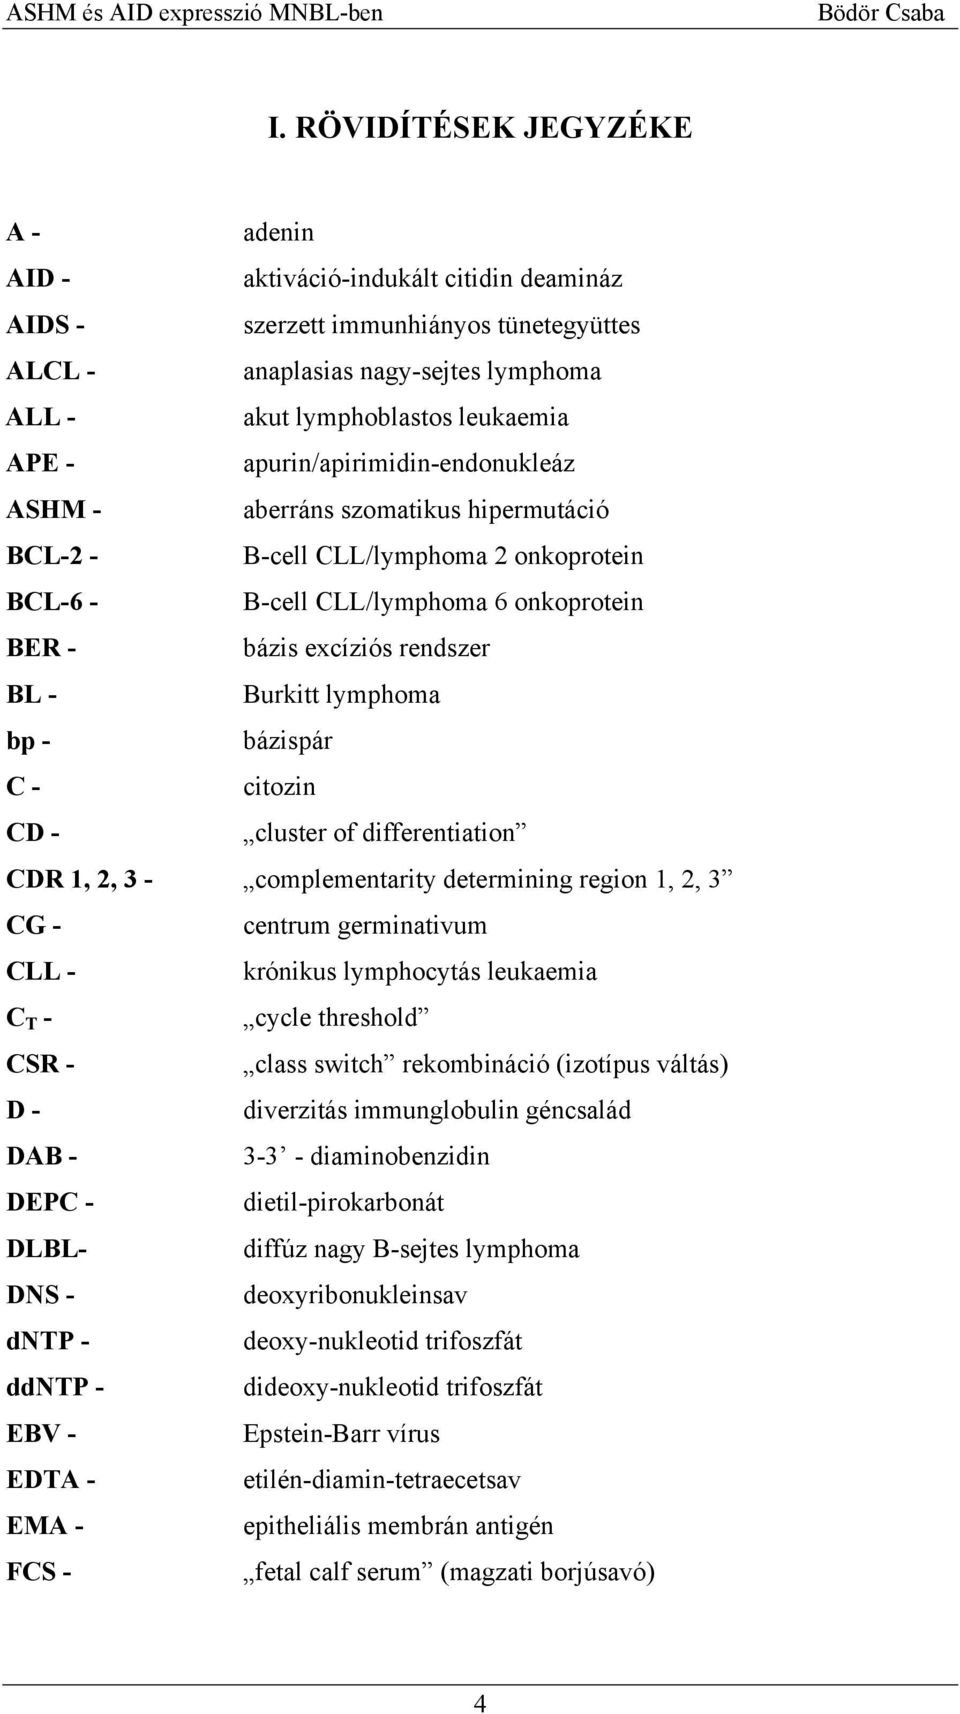 lymphoma bp - bázispár C - citozin CD - cluster of differentiation CDR 1, 2, 3 - complementarity determining region 1, 2, 3 CG - centrum germinativum CLL - krónikus lymphocytás leukaemia C T - cycle